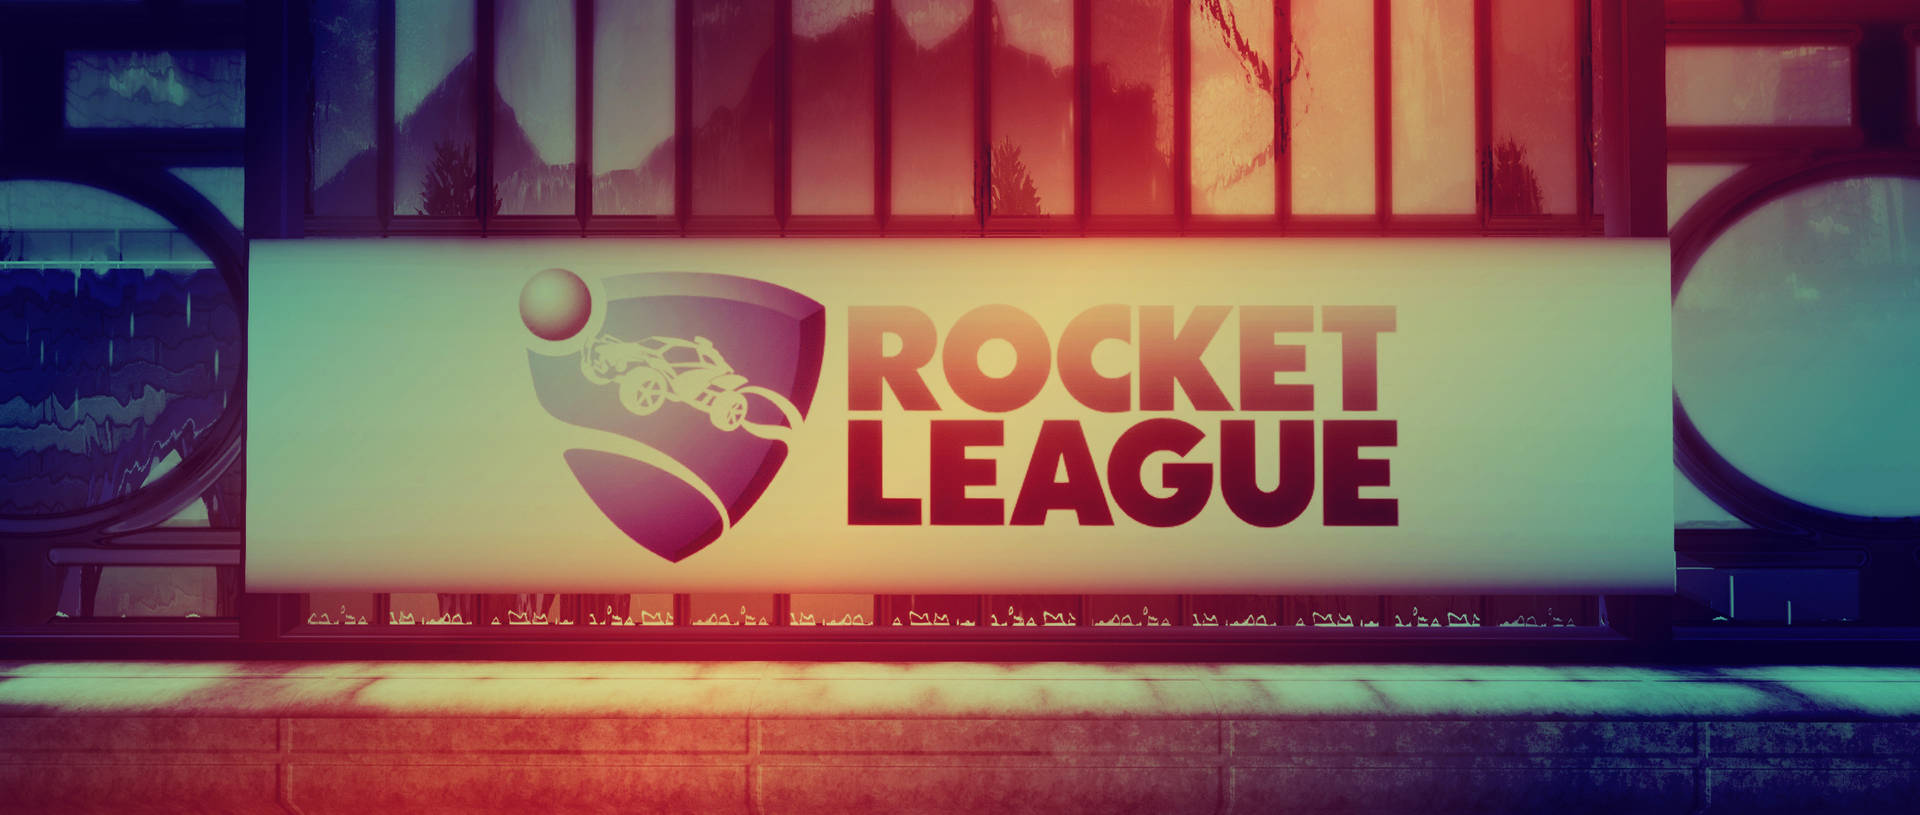 Cool Rocket League Logo